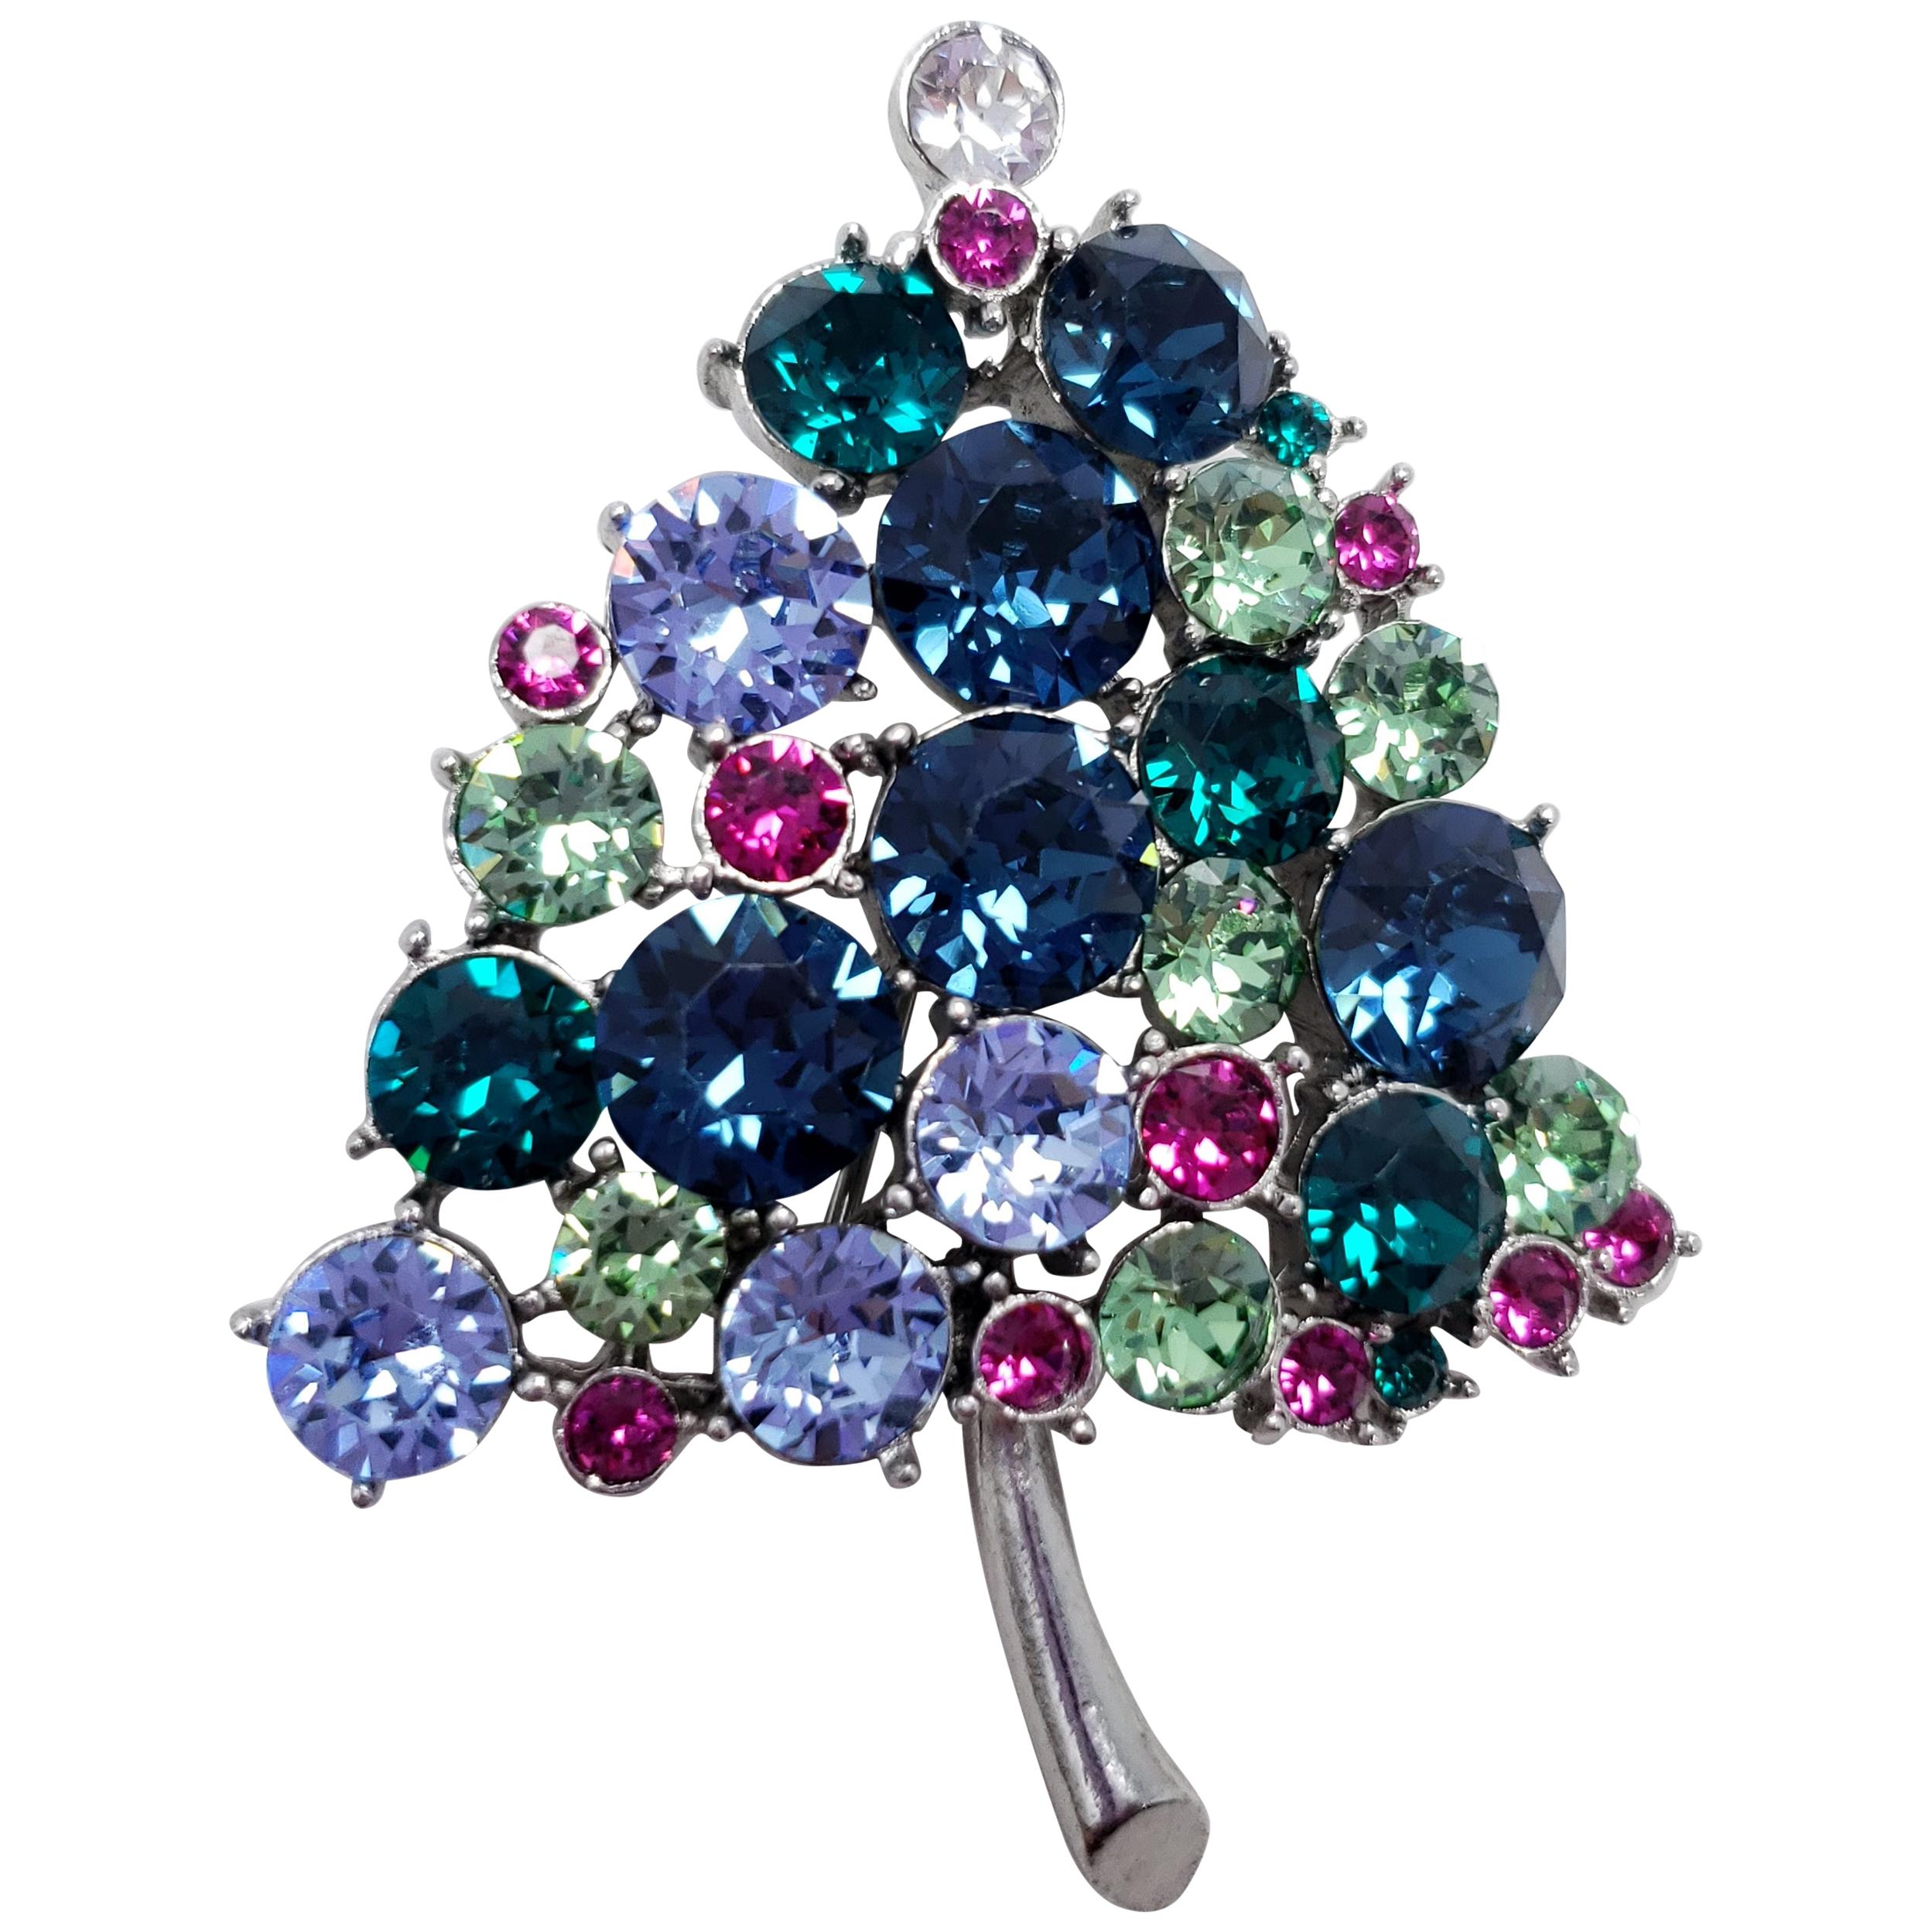 Vendome Jeweled Christmas Tree Pin, Festive Vintage Brooch